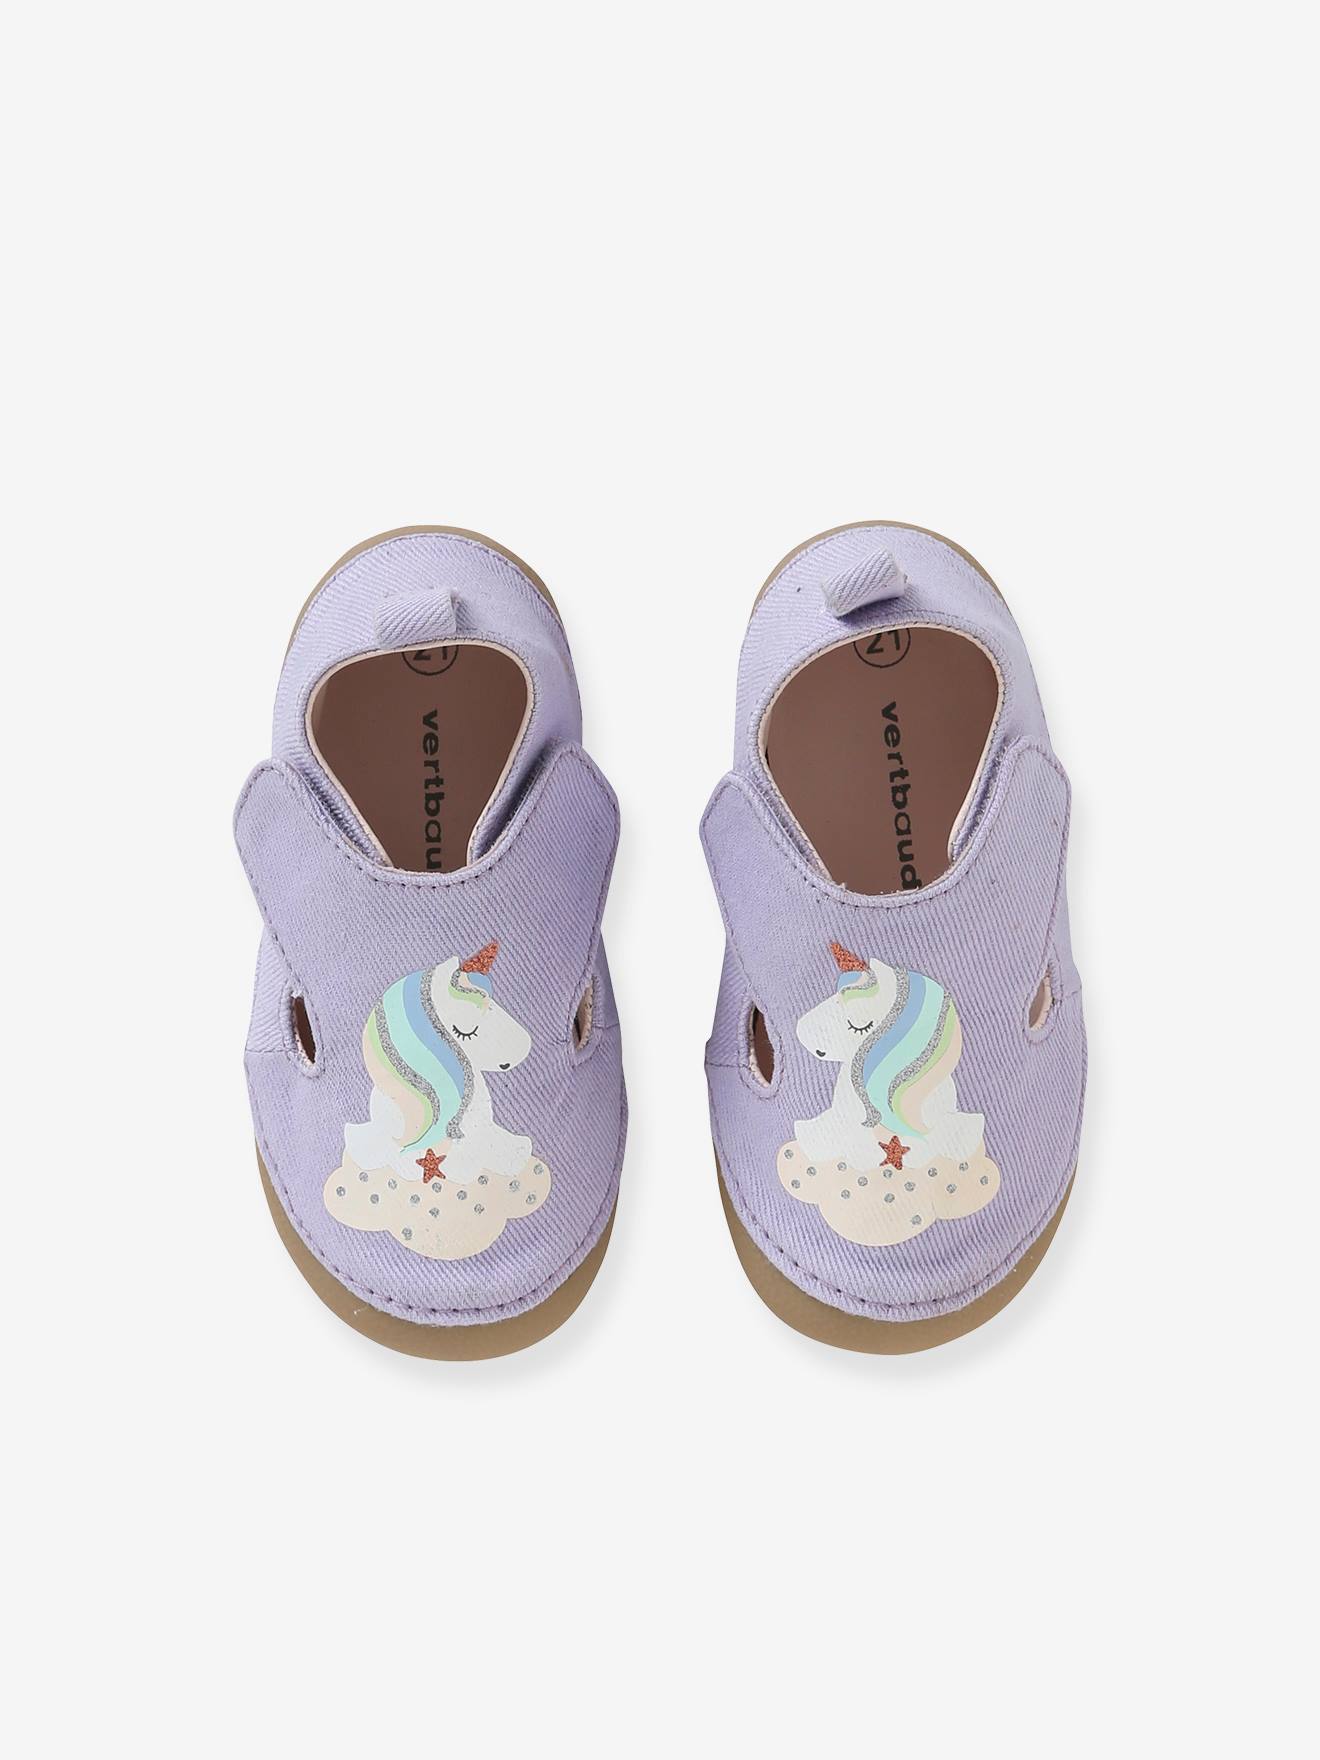 Zapatillas casa de tela con unicornio, niña violeta liso - Vertbaudet